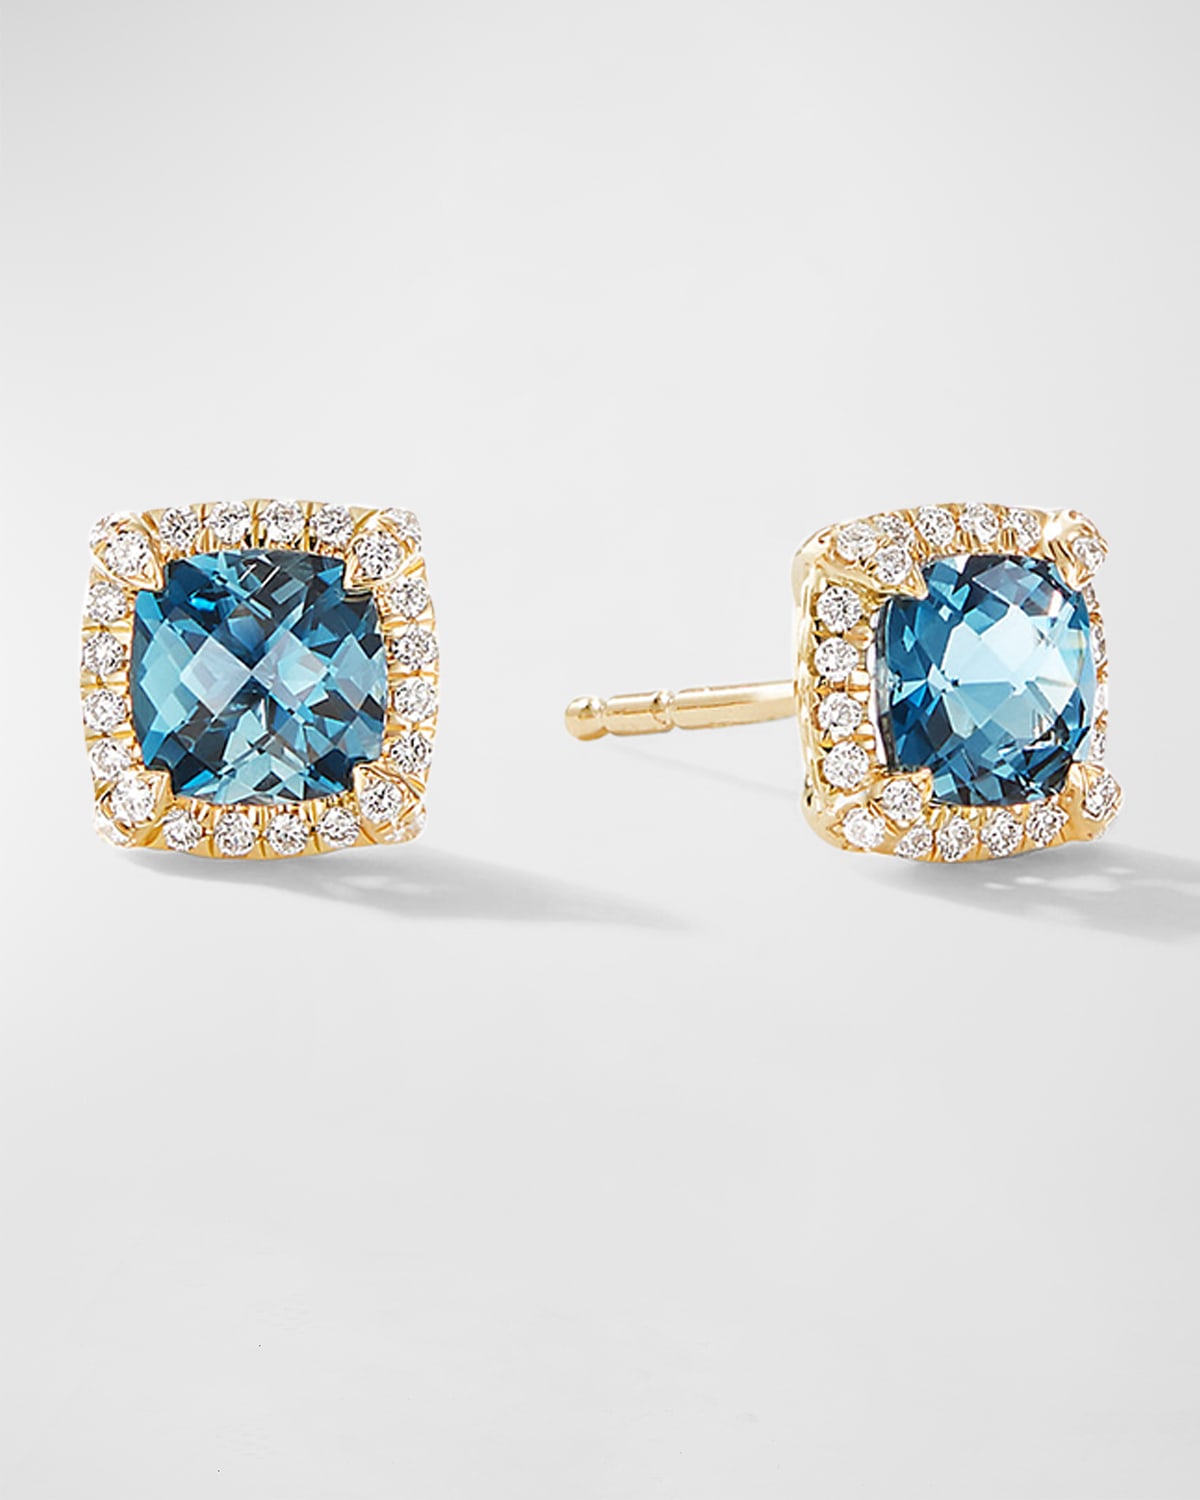 David Yurman Chatelaine Earrings With Gemstone And Diamonds In 18k Gold, 5mm In Hampton Blue Topa